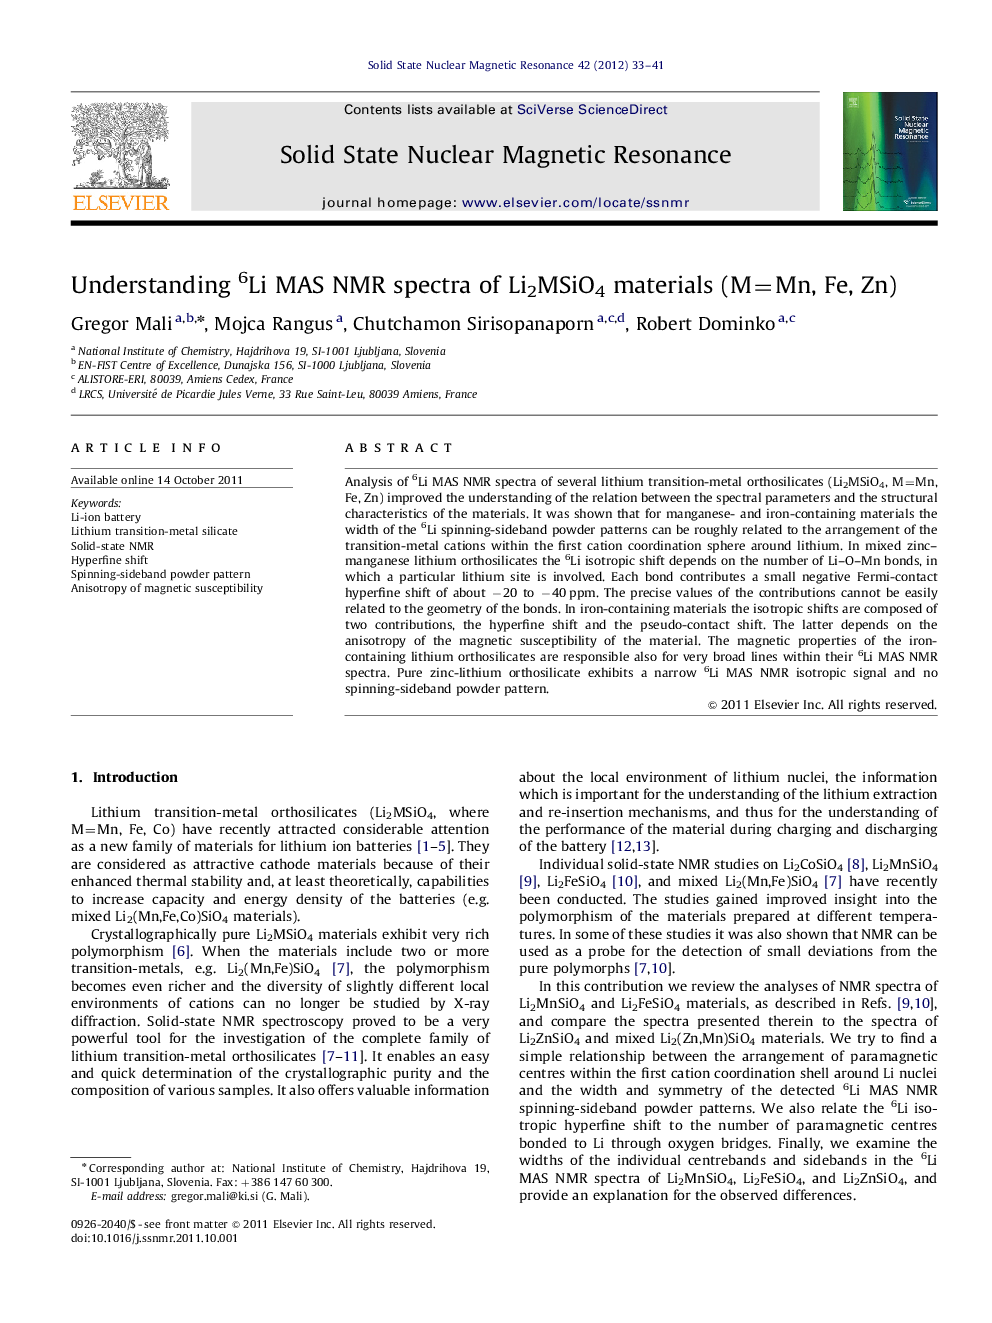 Understanding 6Li MAS NMR spectra of Li2MSiO4 materials (M=Mn, Fe, Zn)